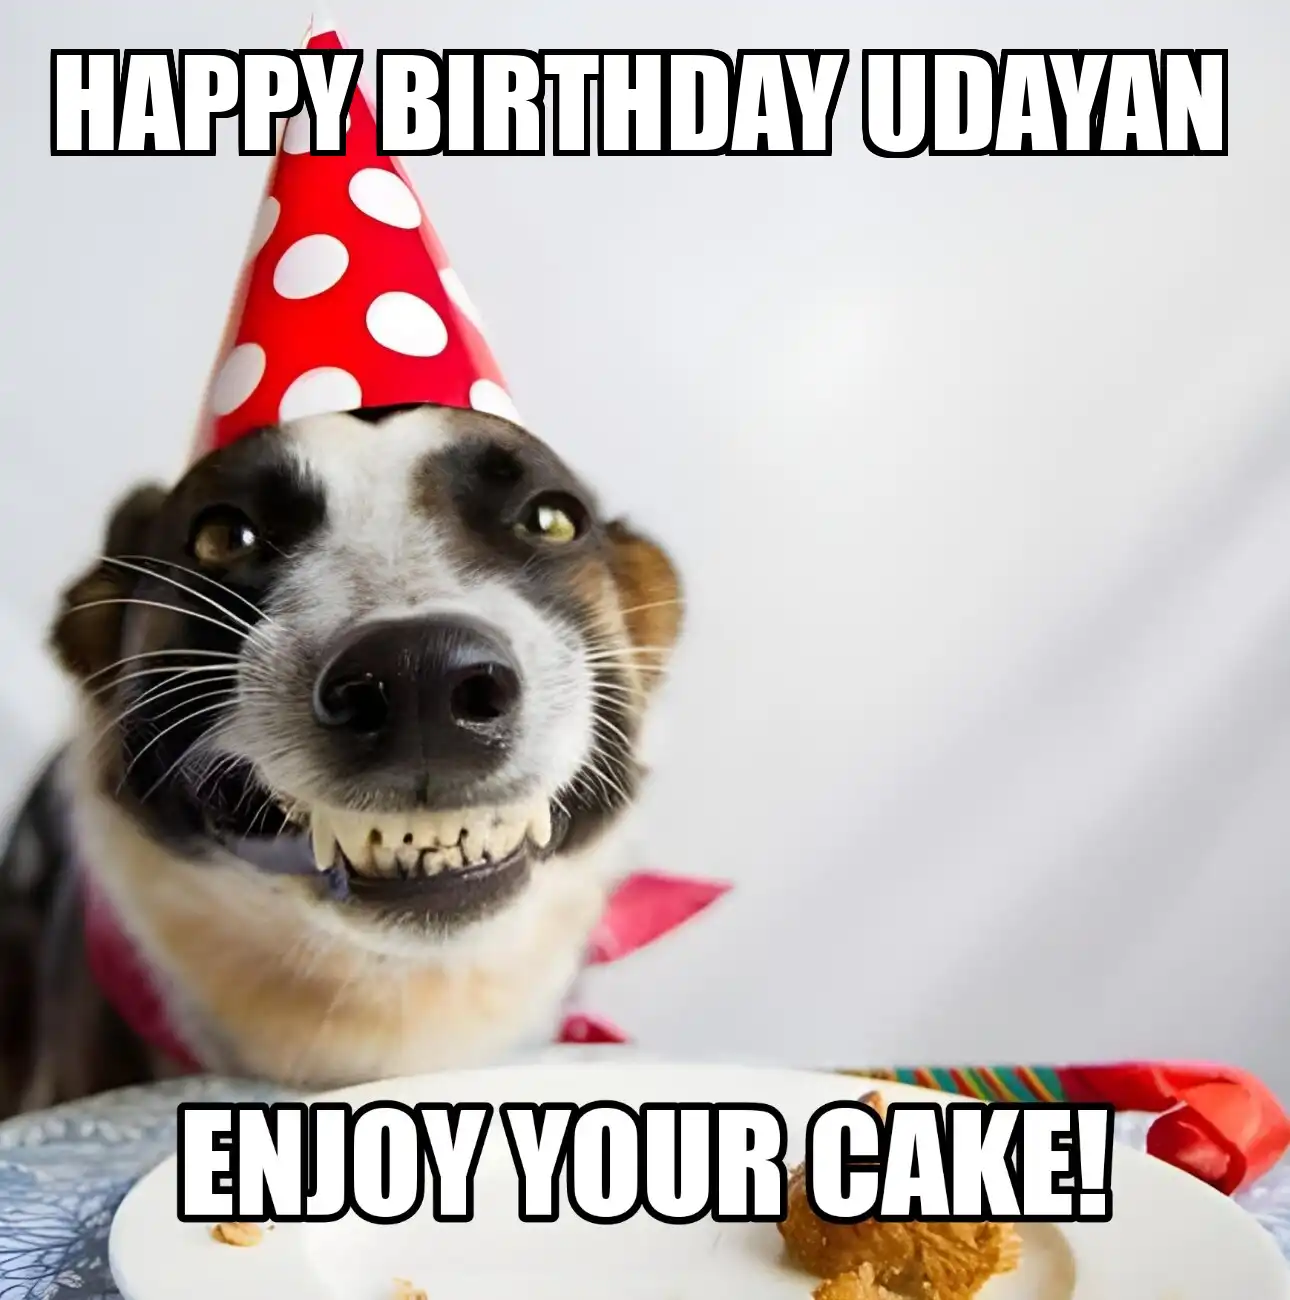 Happy Birthday Udayan Enjoy Your Cake Dog Meme